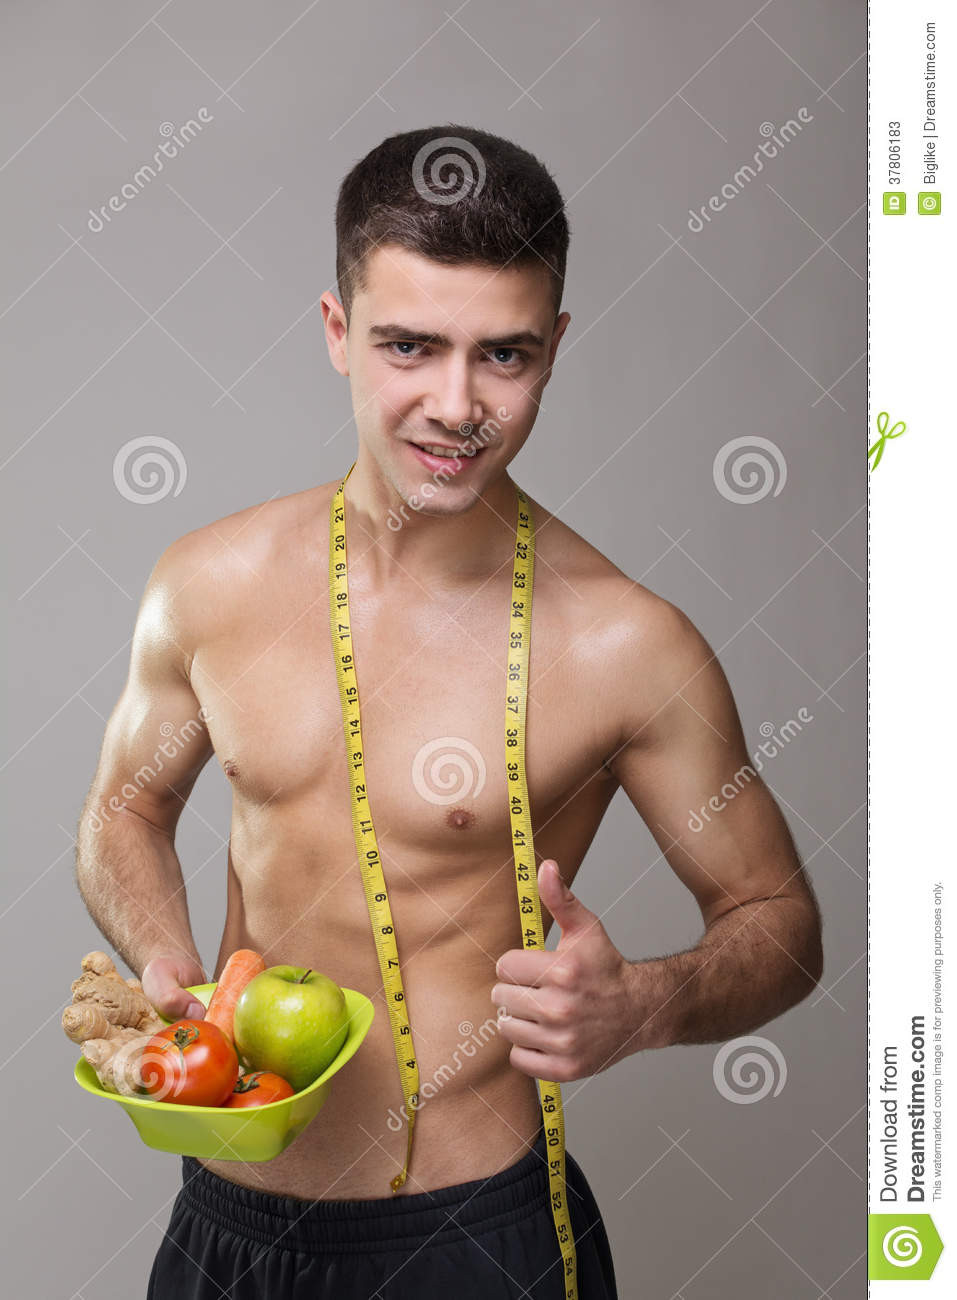 Vegan Fitness Men
 Fit Vegan Man With Measuring Tape And Healthy Food Stock